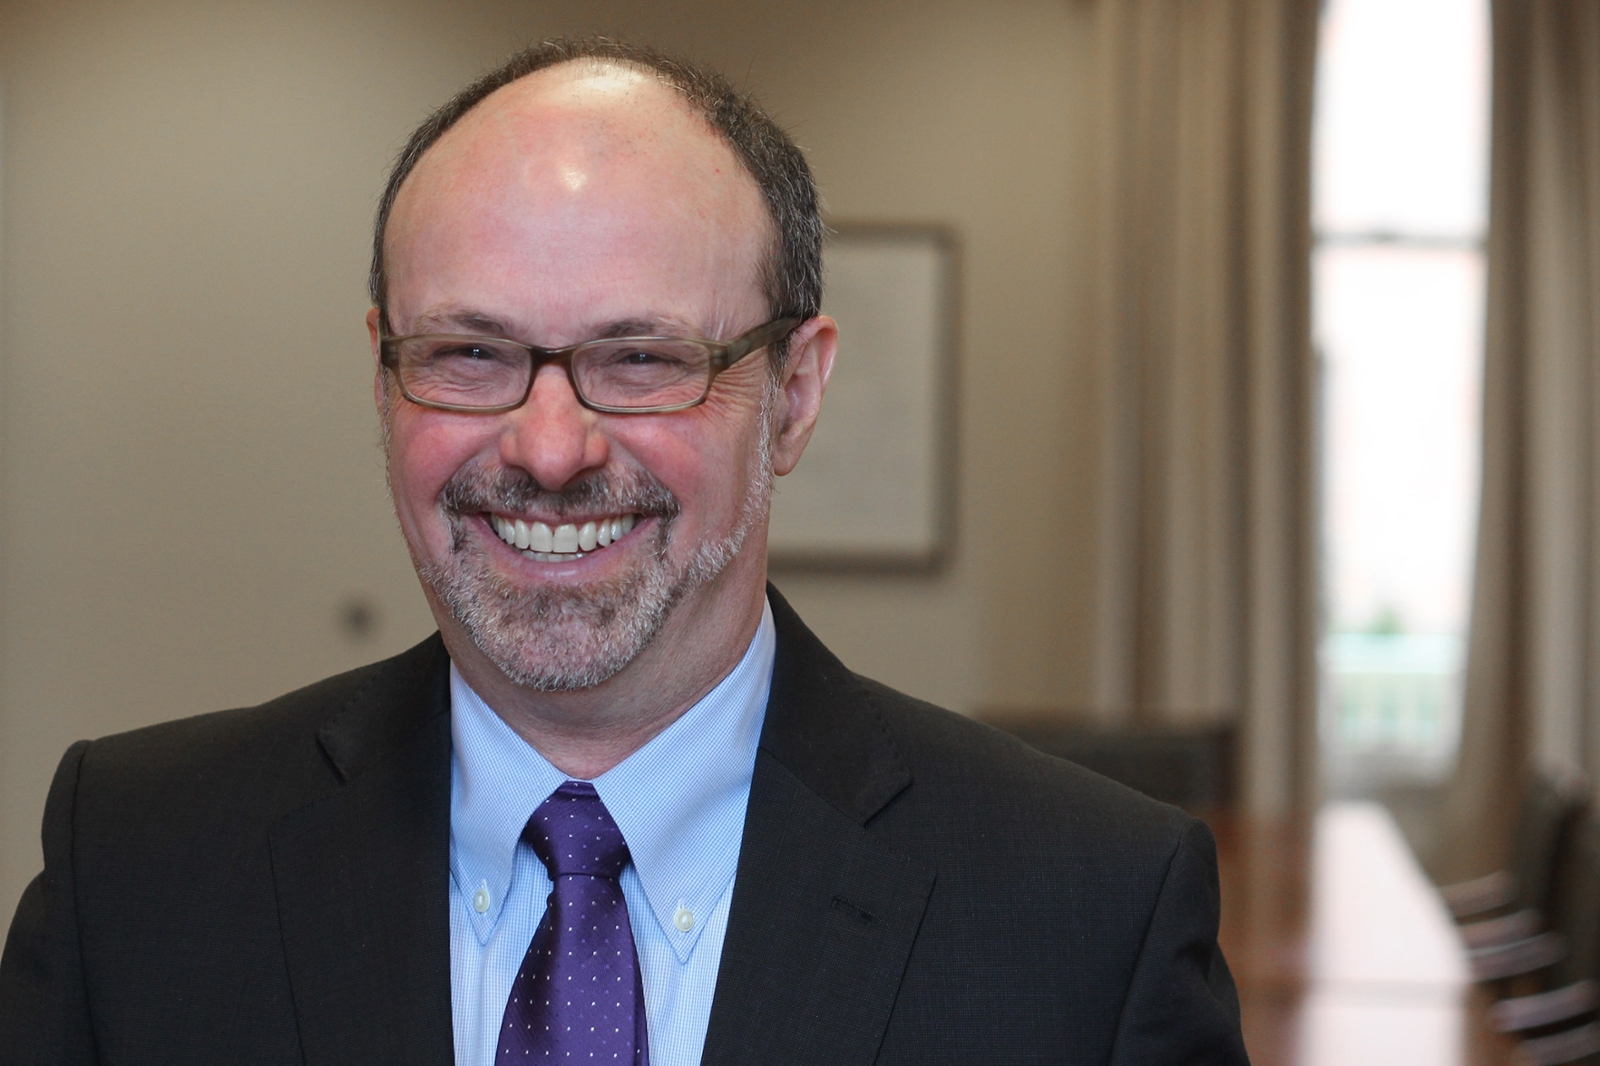 Photo of Chatham University President David Finegold smiling.